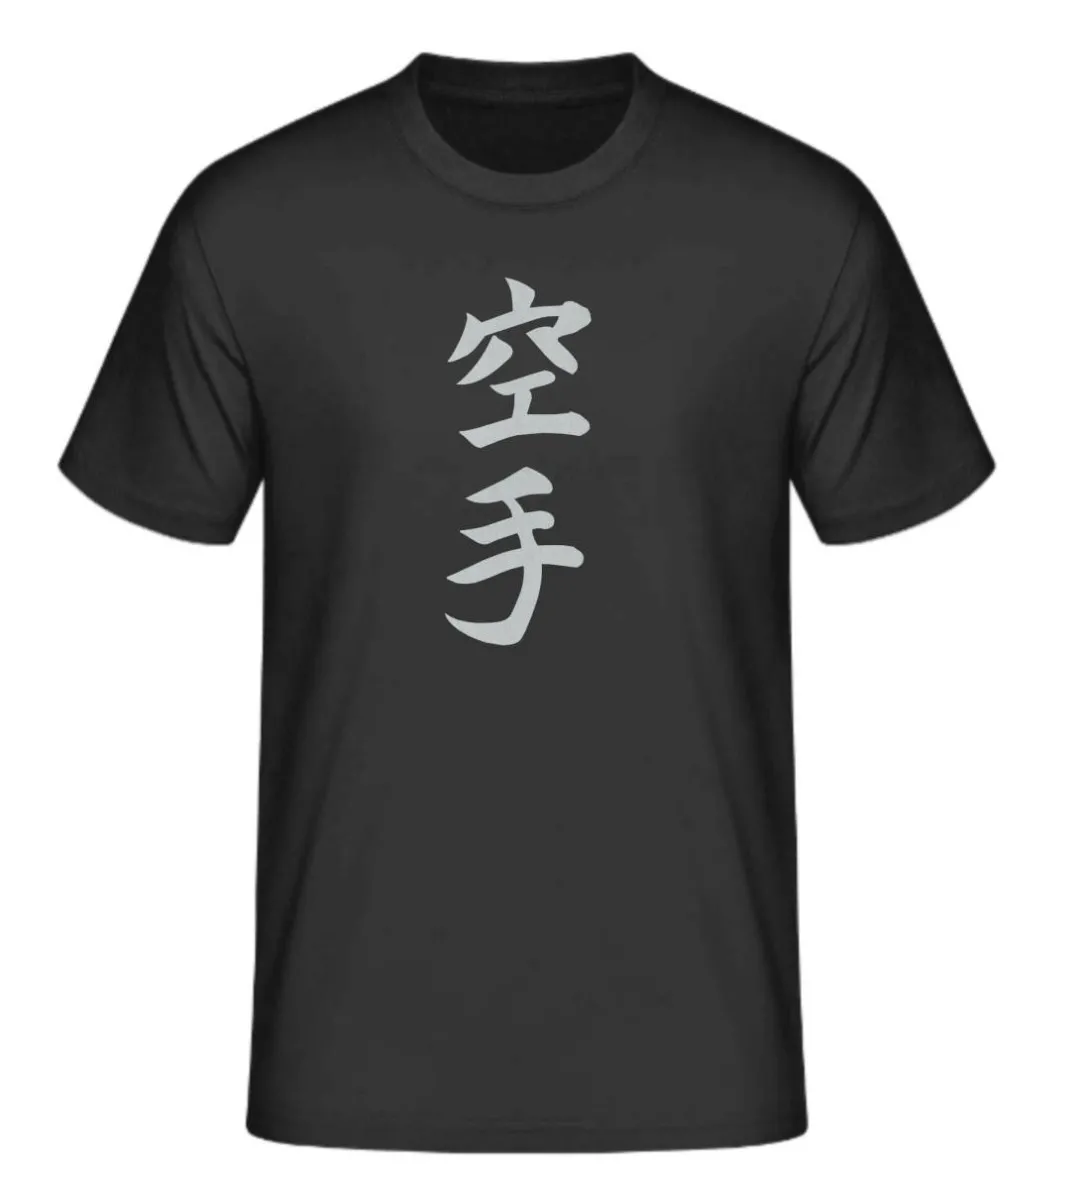 T-Shirt schwarz mit silbernem Kanji Karate, Judo, Aukido, Taekwondo